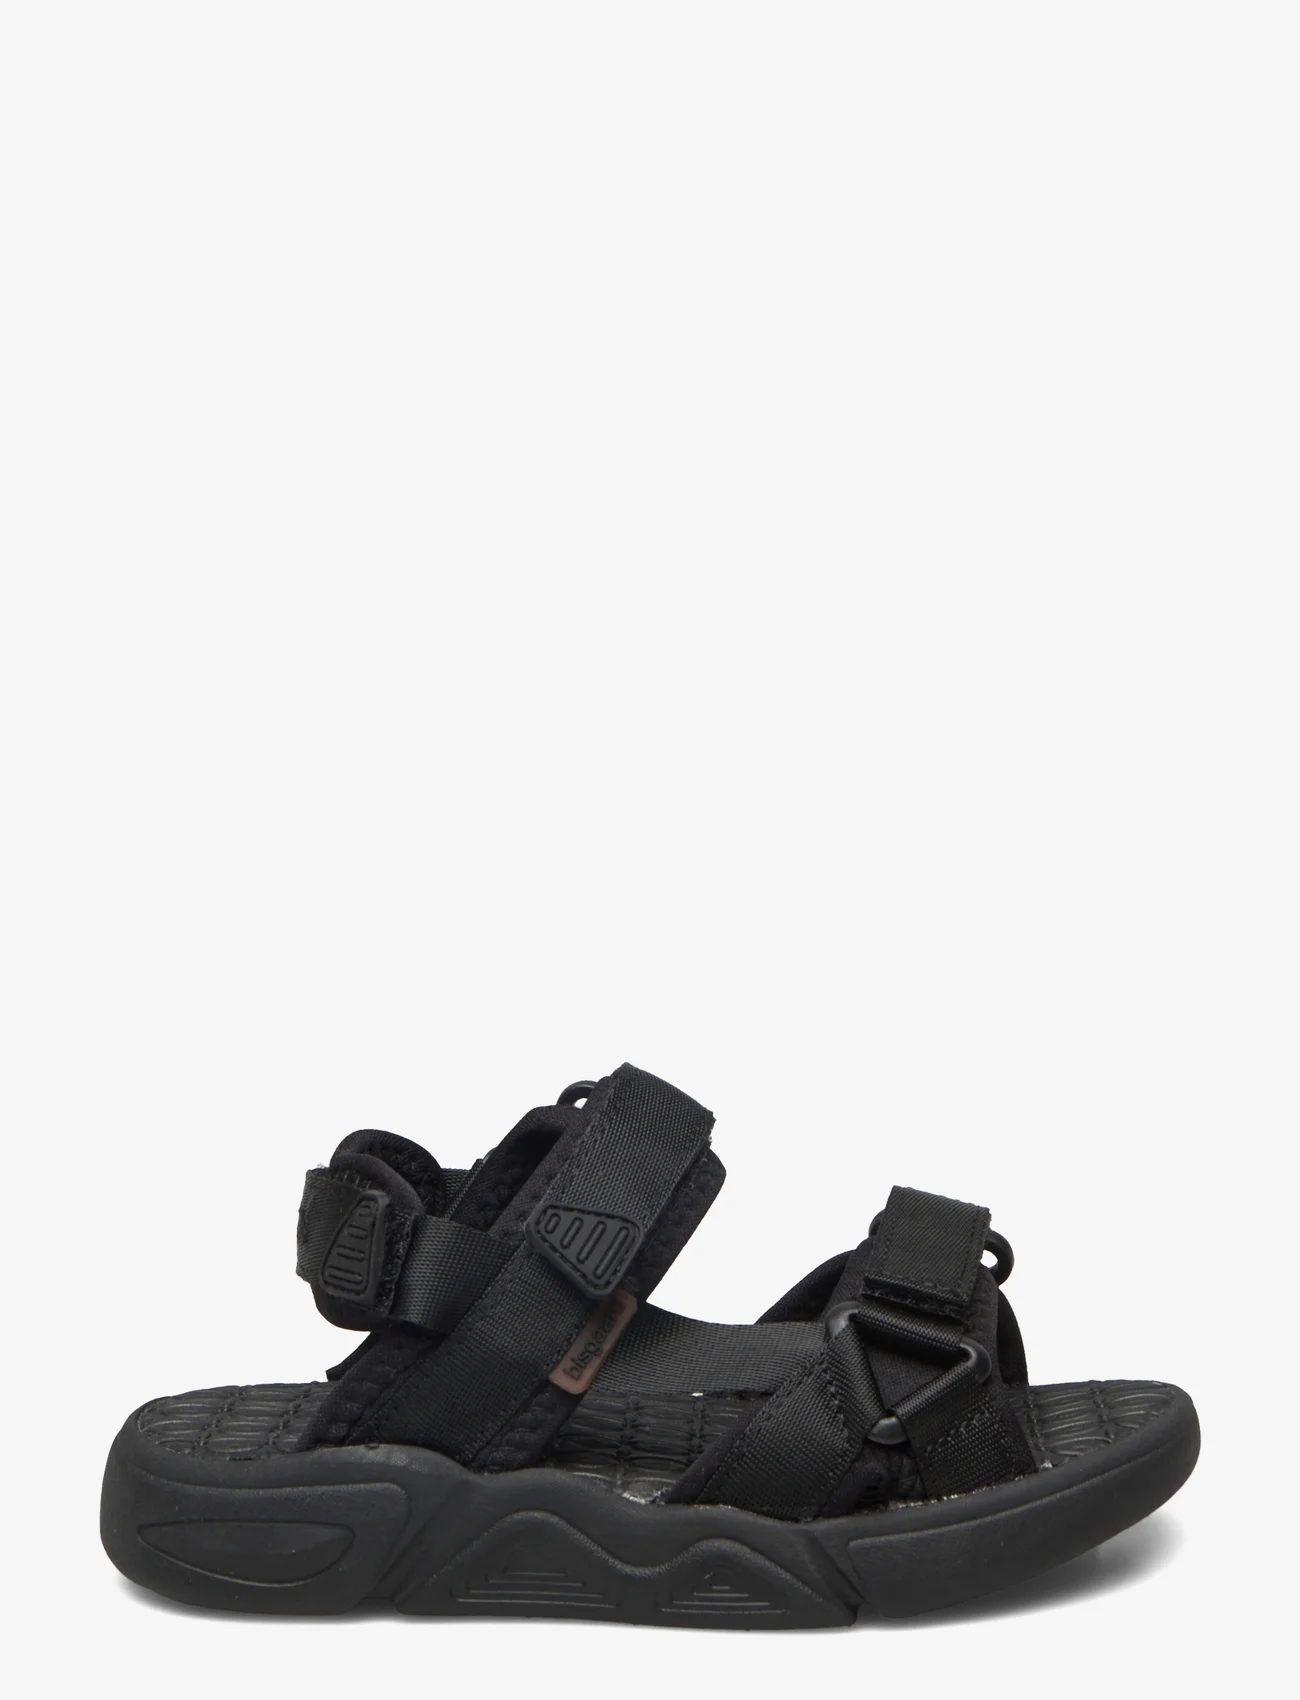 Bisgaard - bisgaard louis s - sandals - black - 1